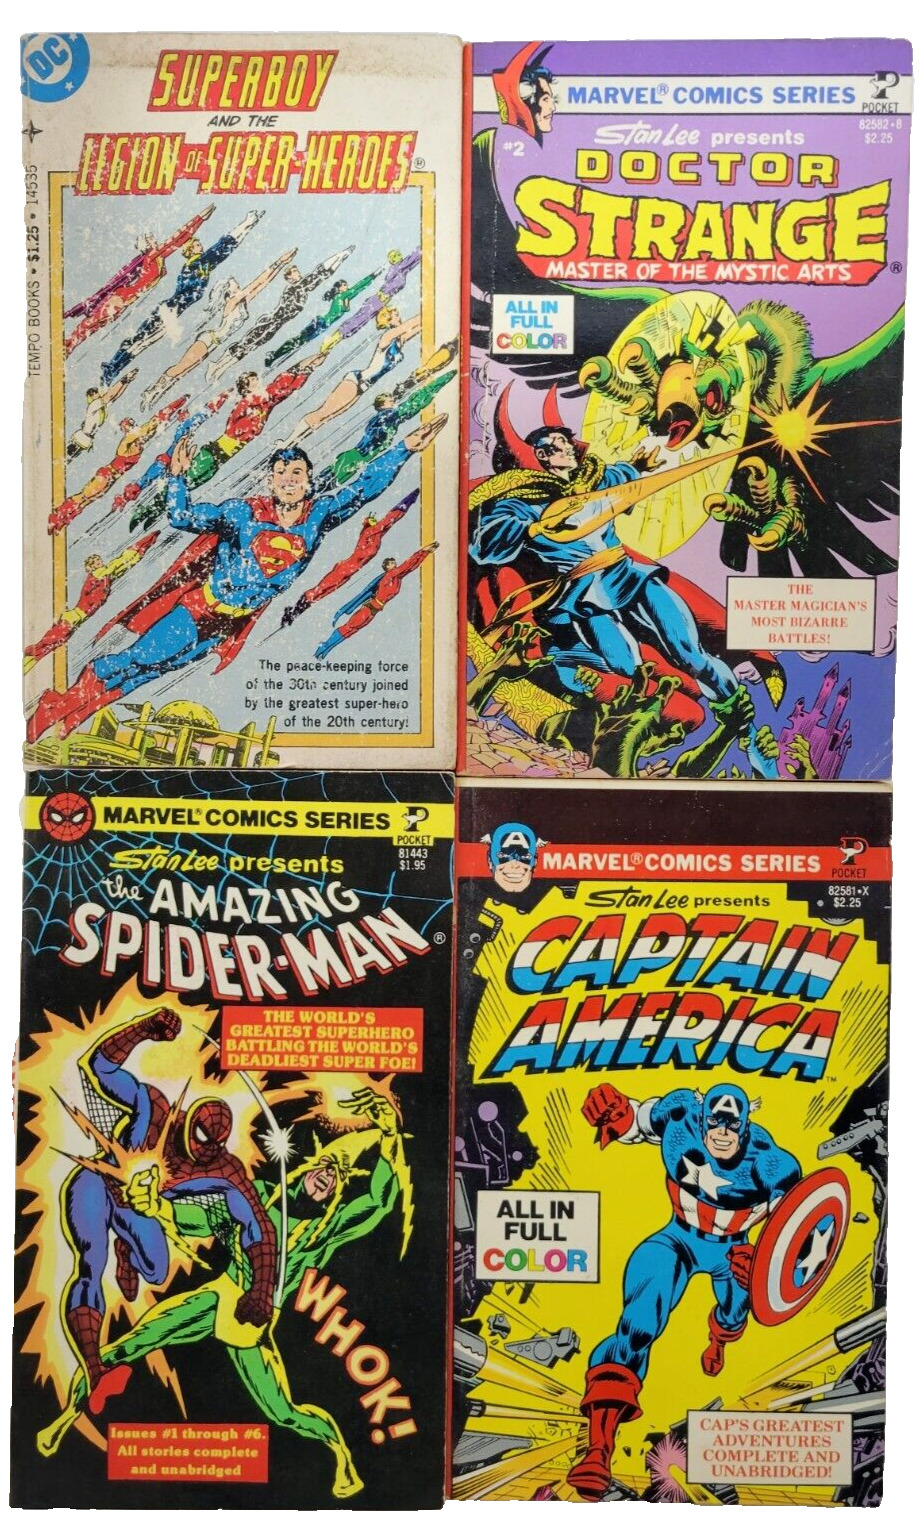 LOT OF 4 COMICS STAN LEE, TEMPO BOOKS SPIDER-MAN CAPTAIN AMERICA SUPERBOY DR STR